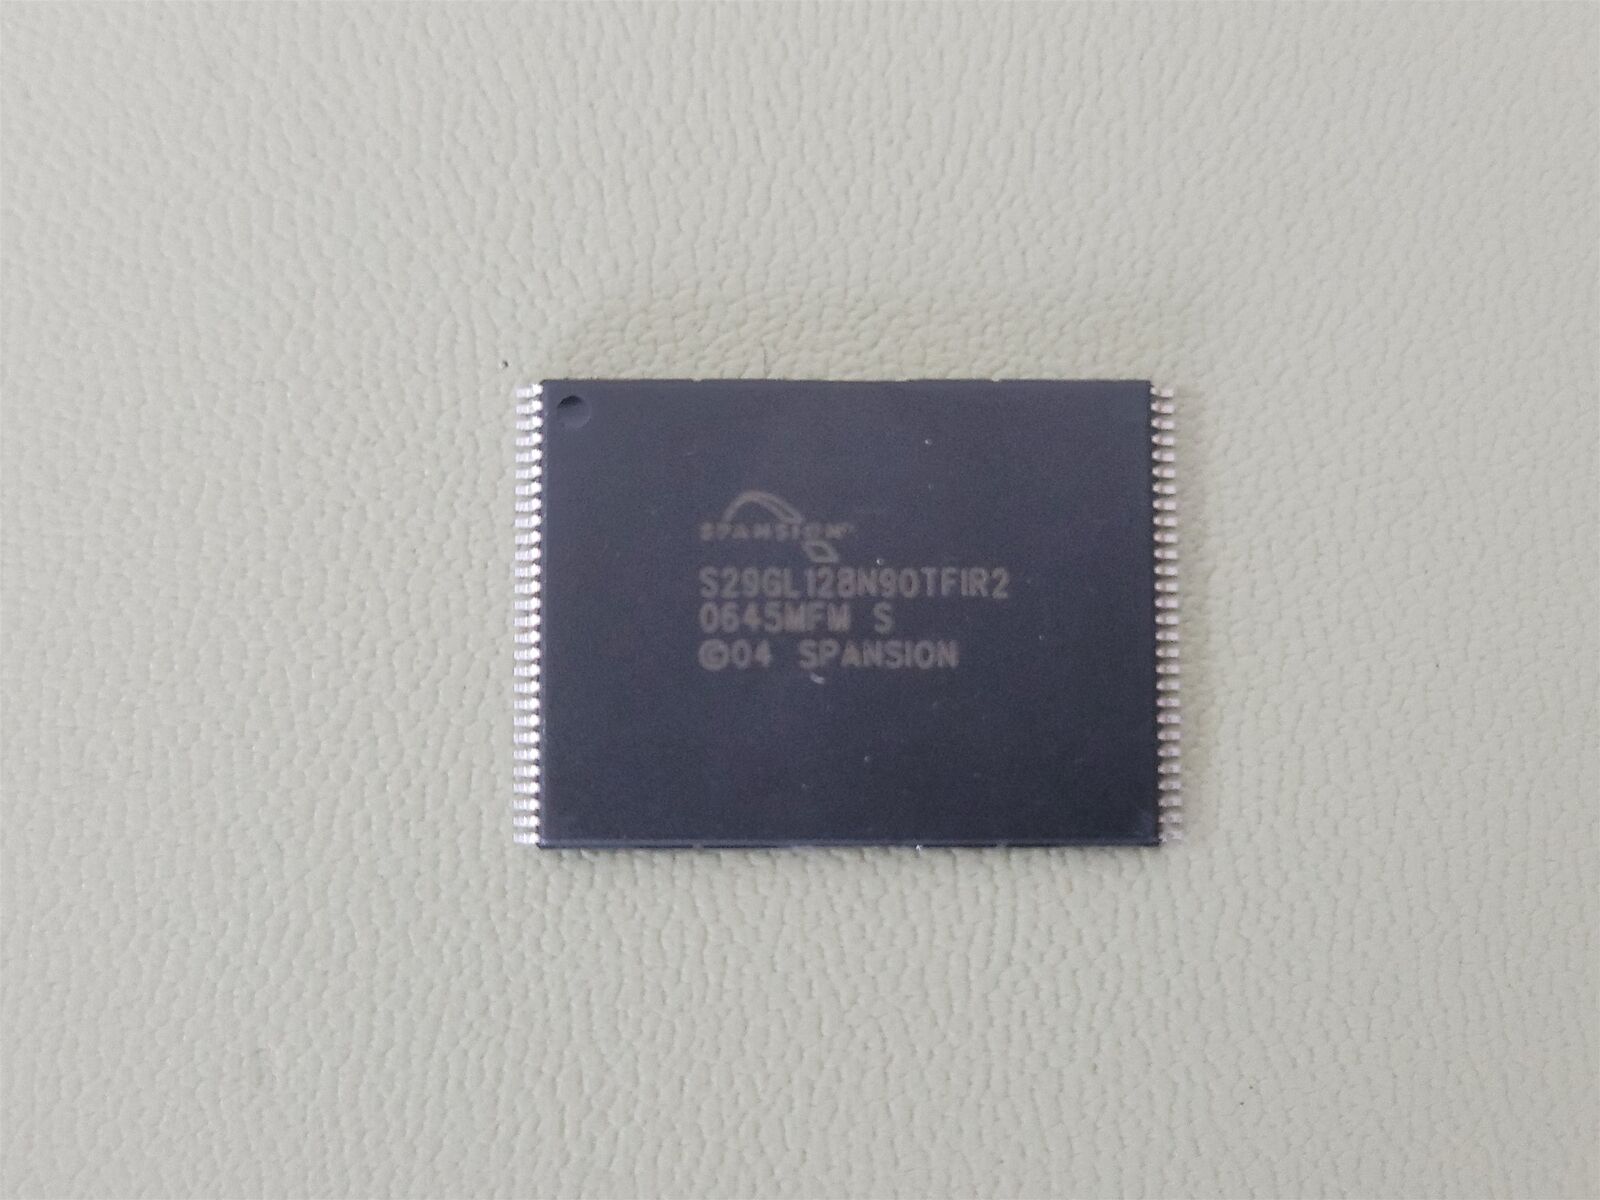 Spansion S29GL128N90TFIR2 TSOP Flash Memory 128MBit 56-Pin 90ns 3V